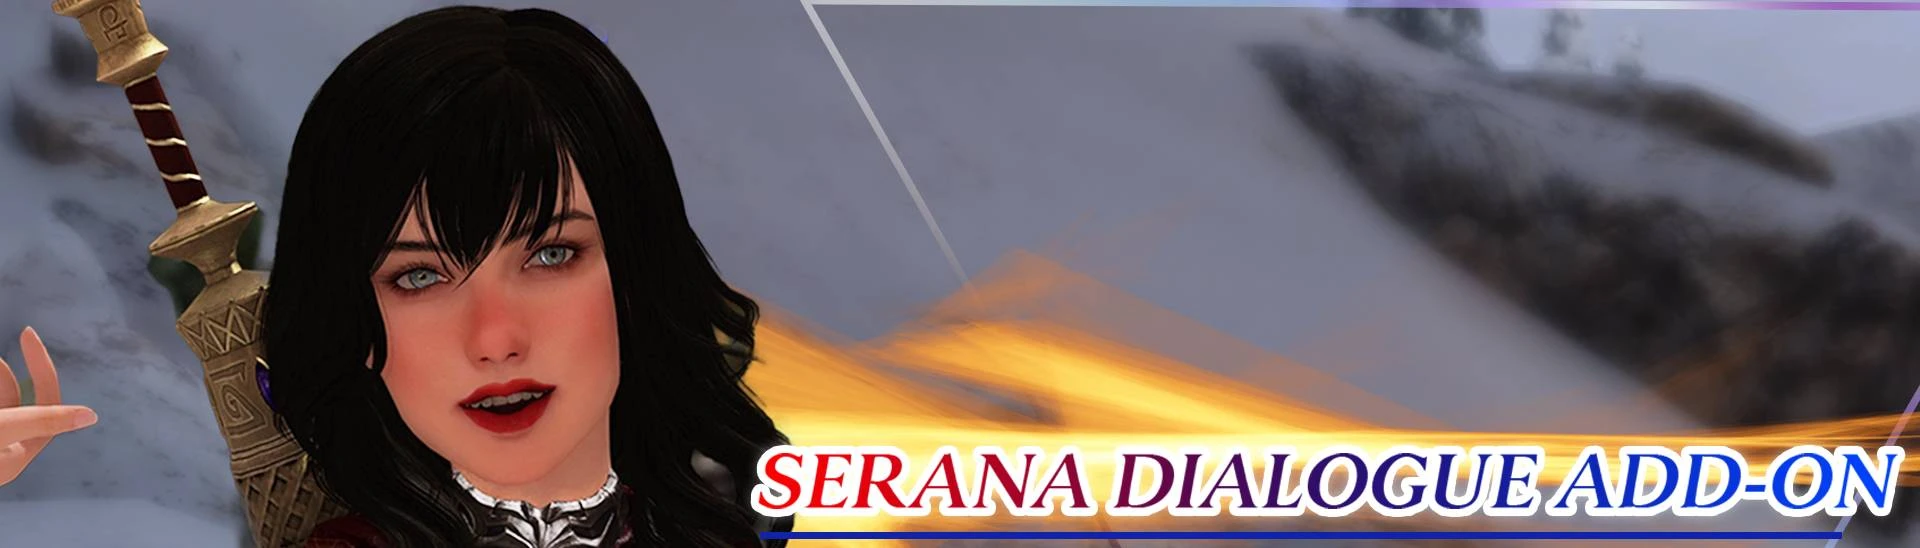 Serana Dialogue Add-On - Traducao PT-BR at Skyrim Nexus - Mods and